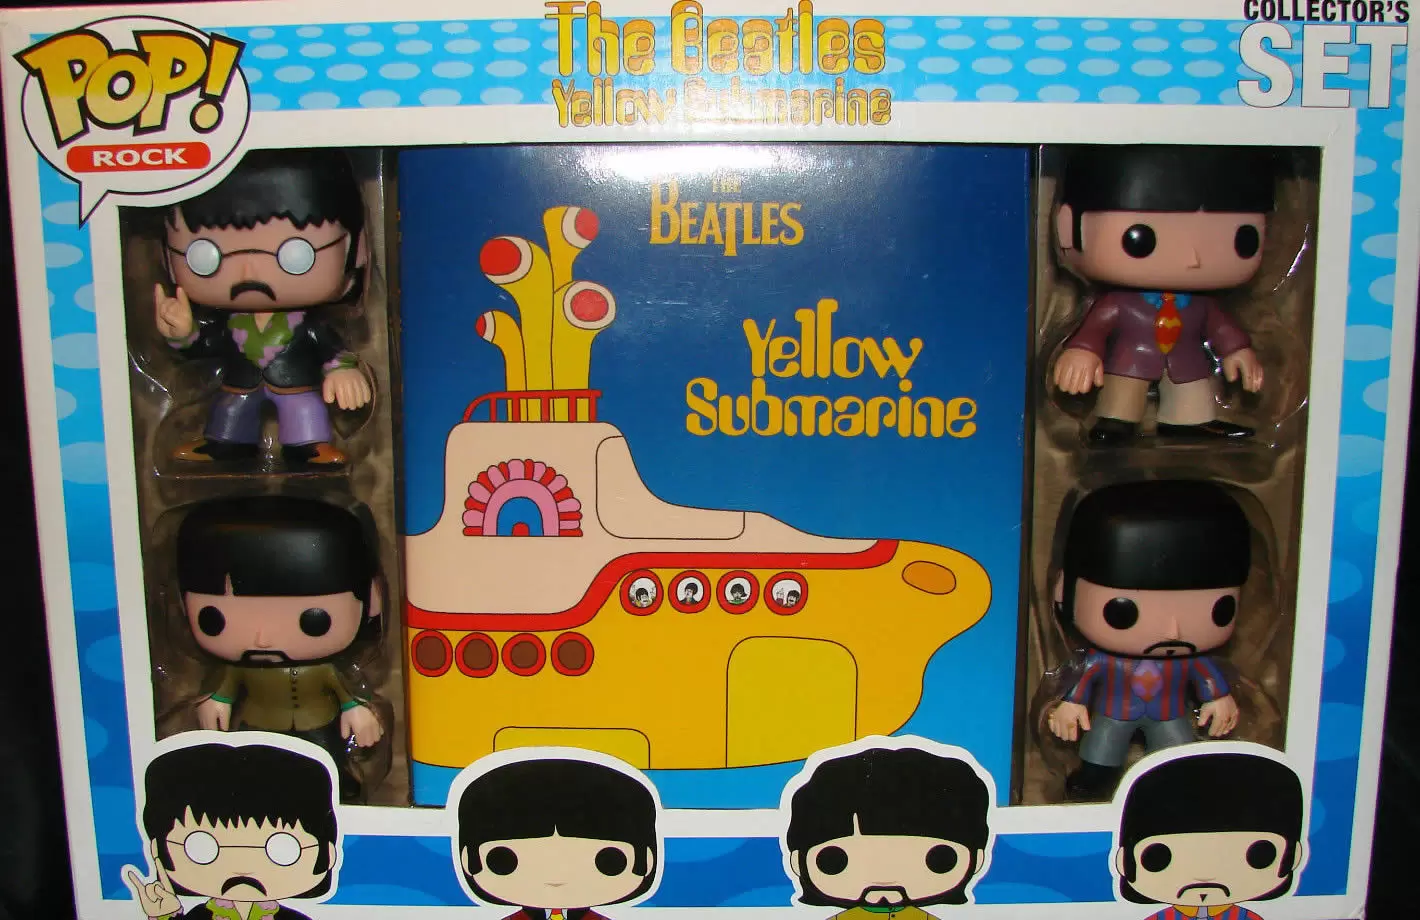 POP! Rocks - The Beatles - Yellow Submarine Collector Set